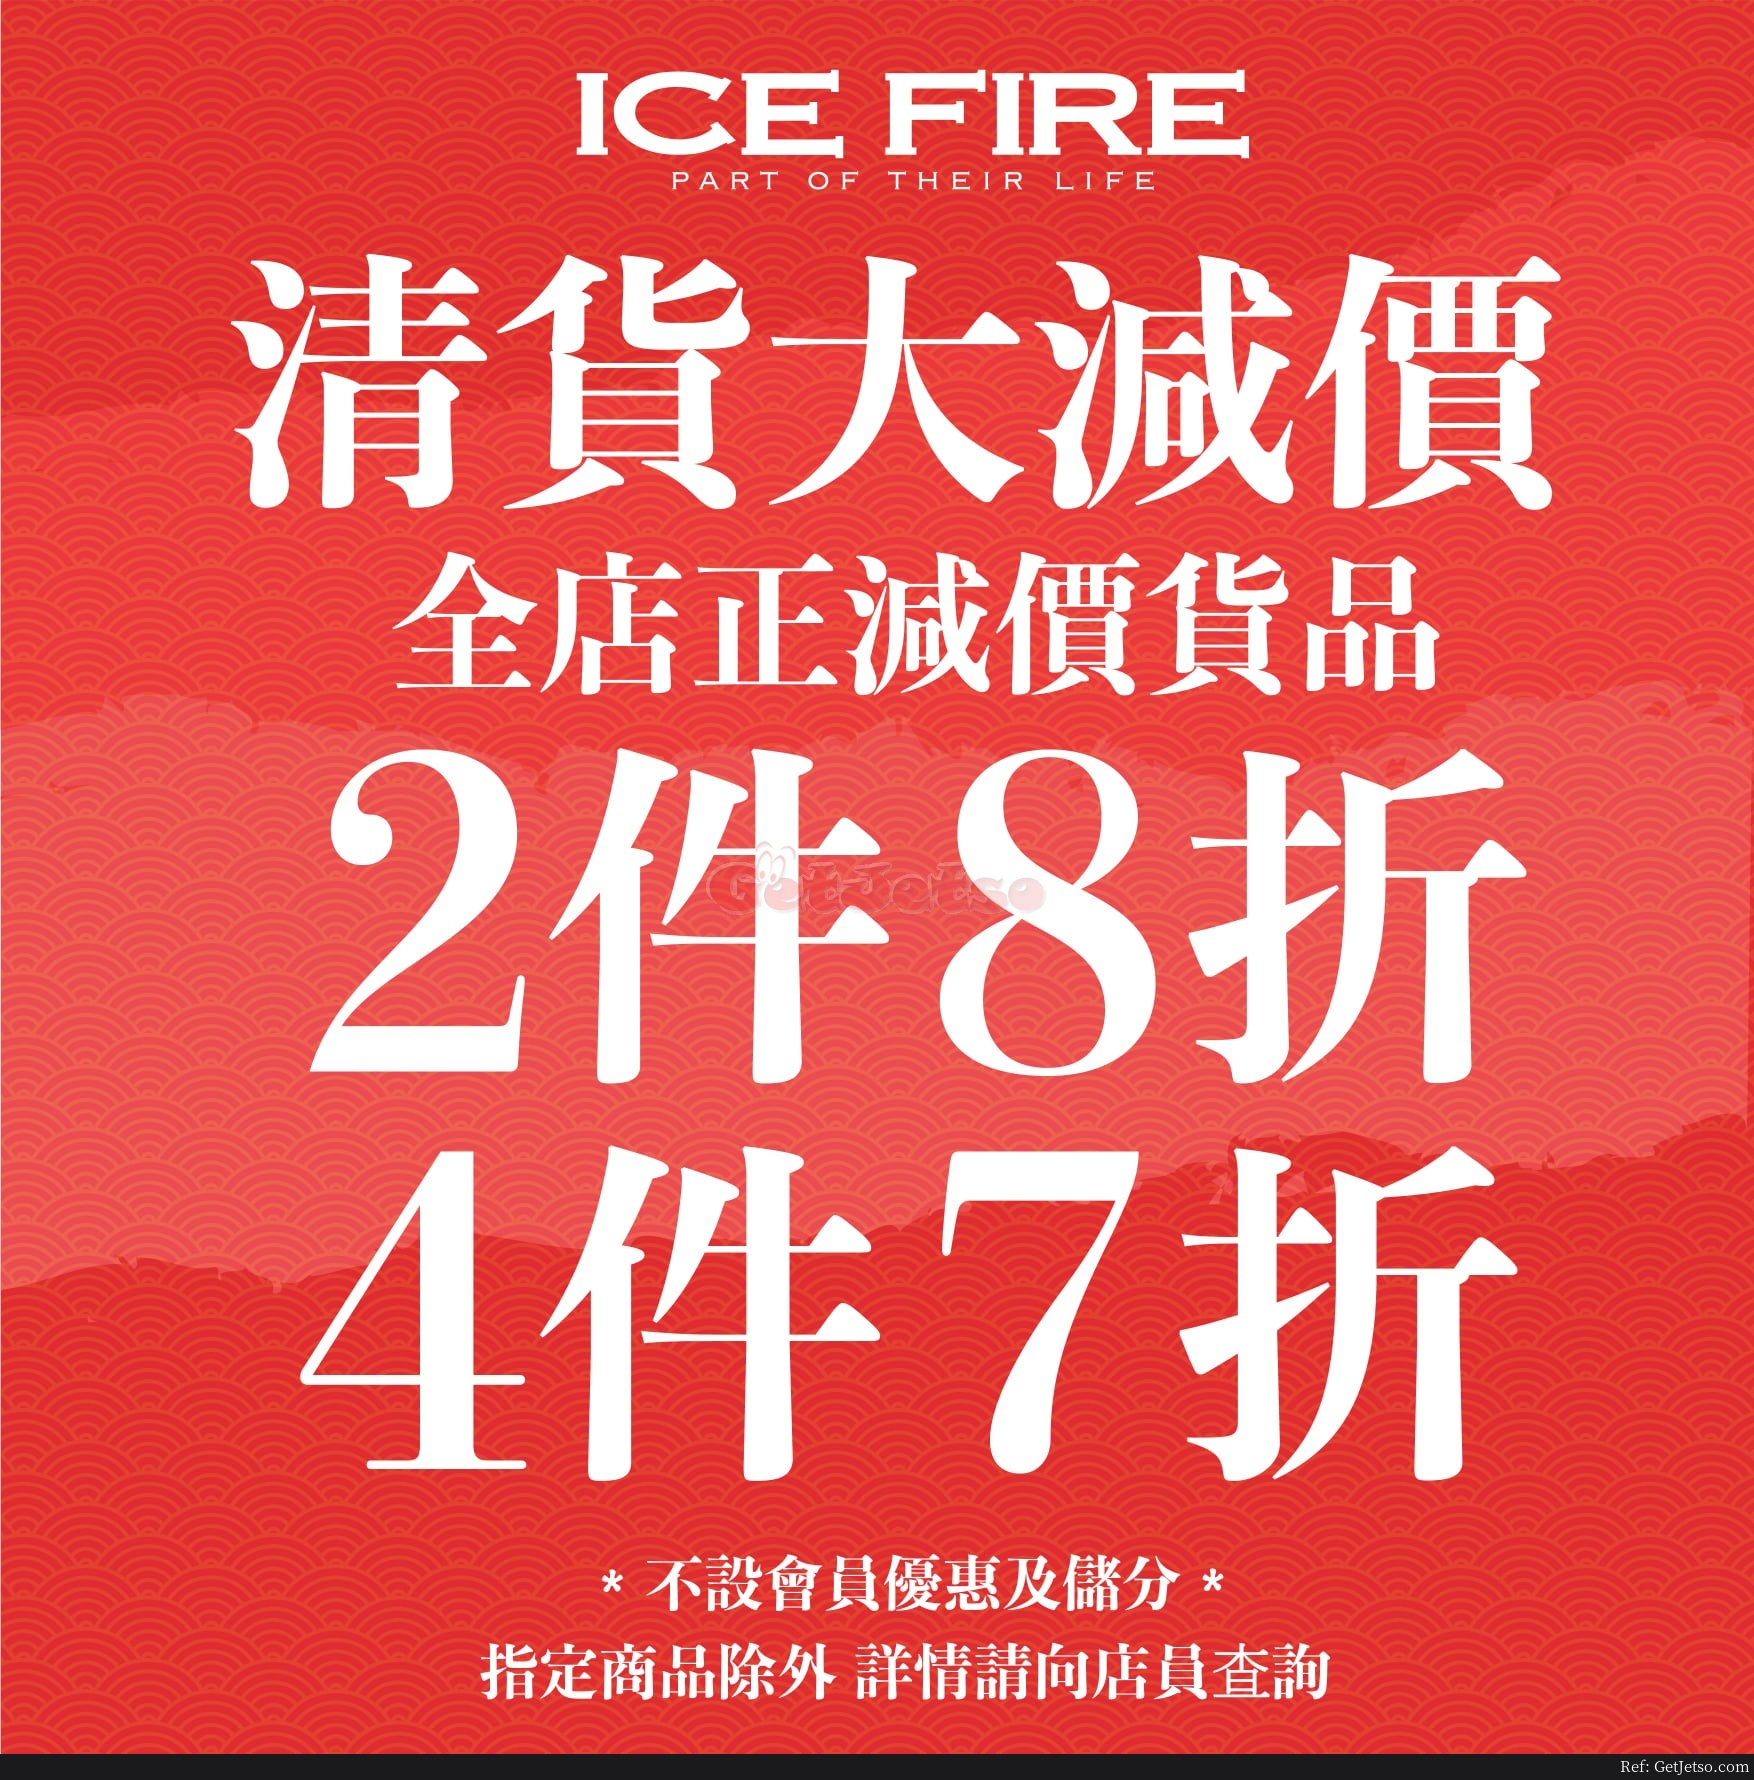 ICE FIRE 低至7折減價優惠(3月6日更新)圖片1